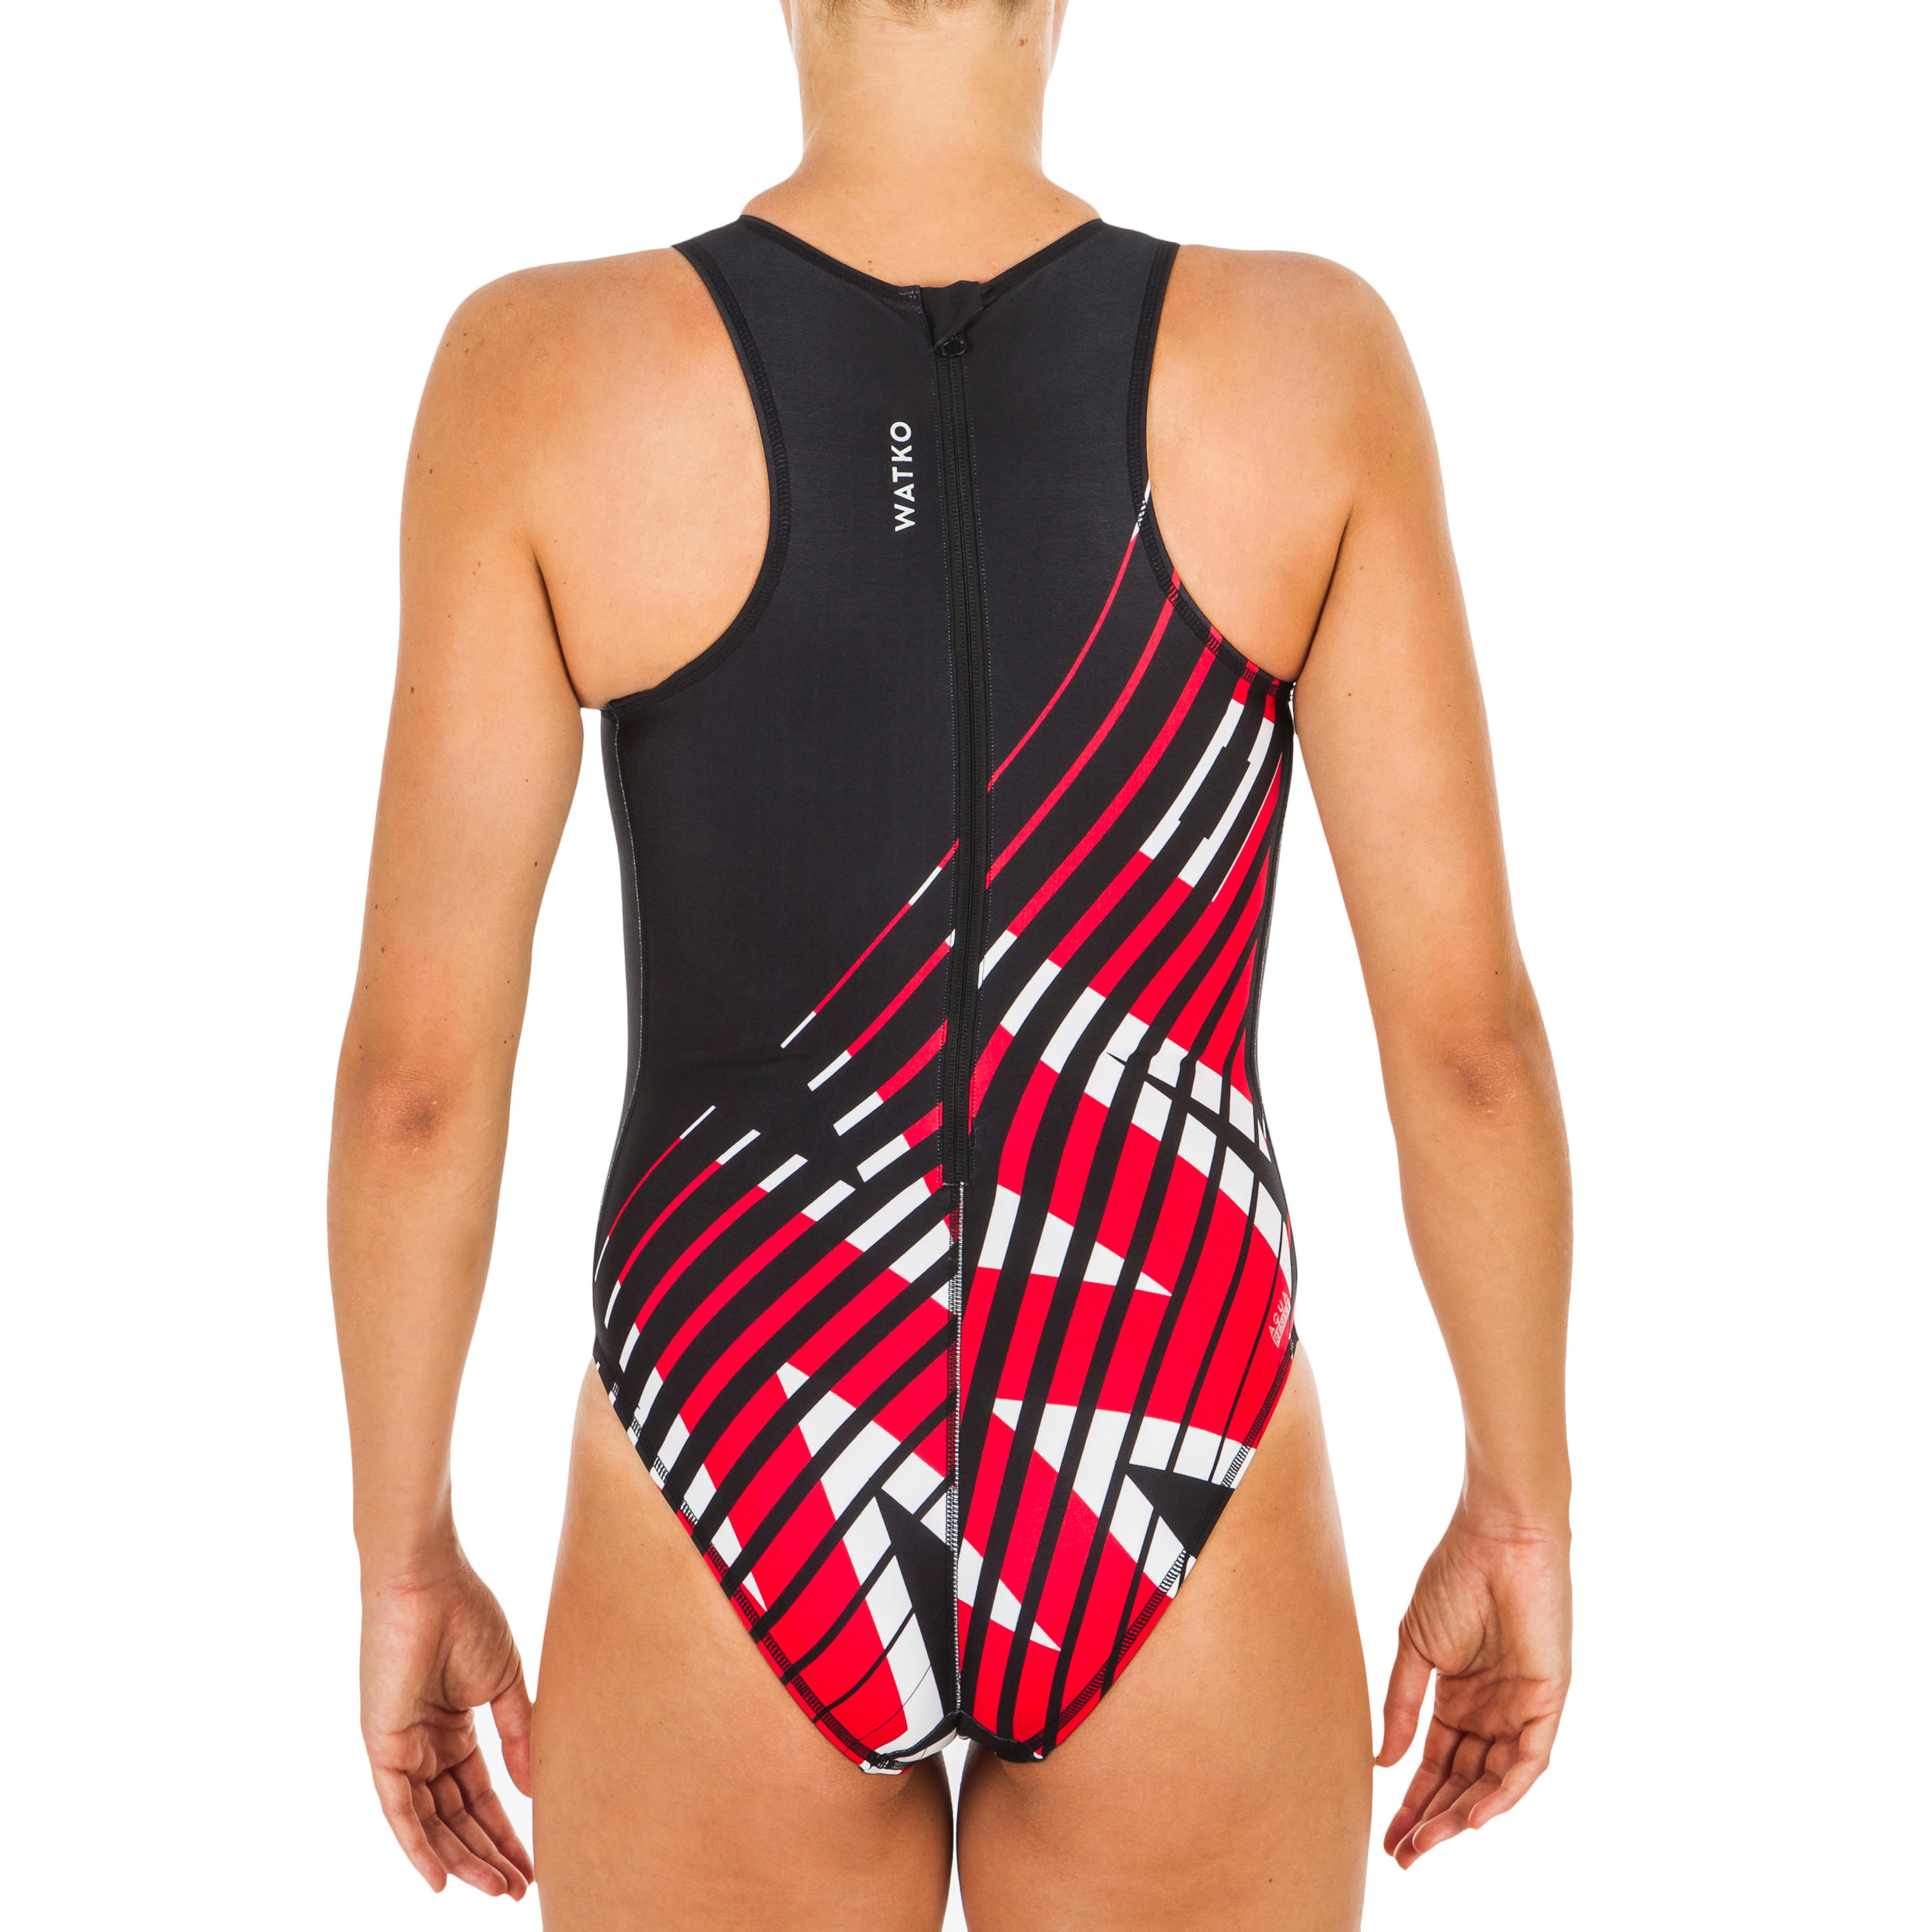 Women's Water Polo One-Piece Swimsuit 500 - Aurora Black 5/6